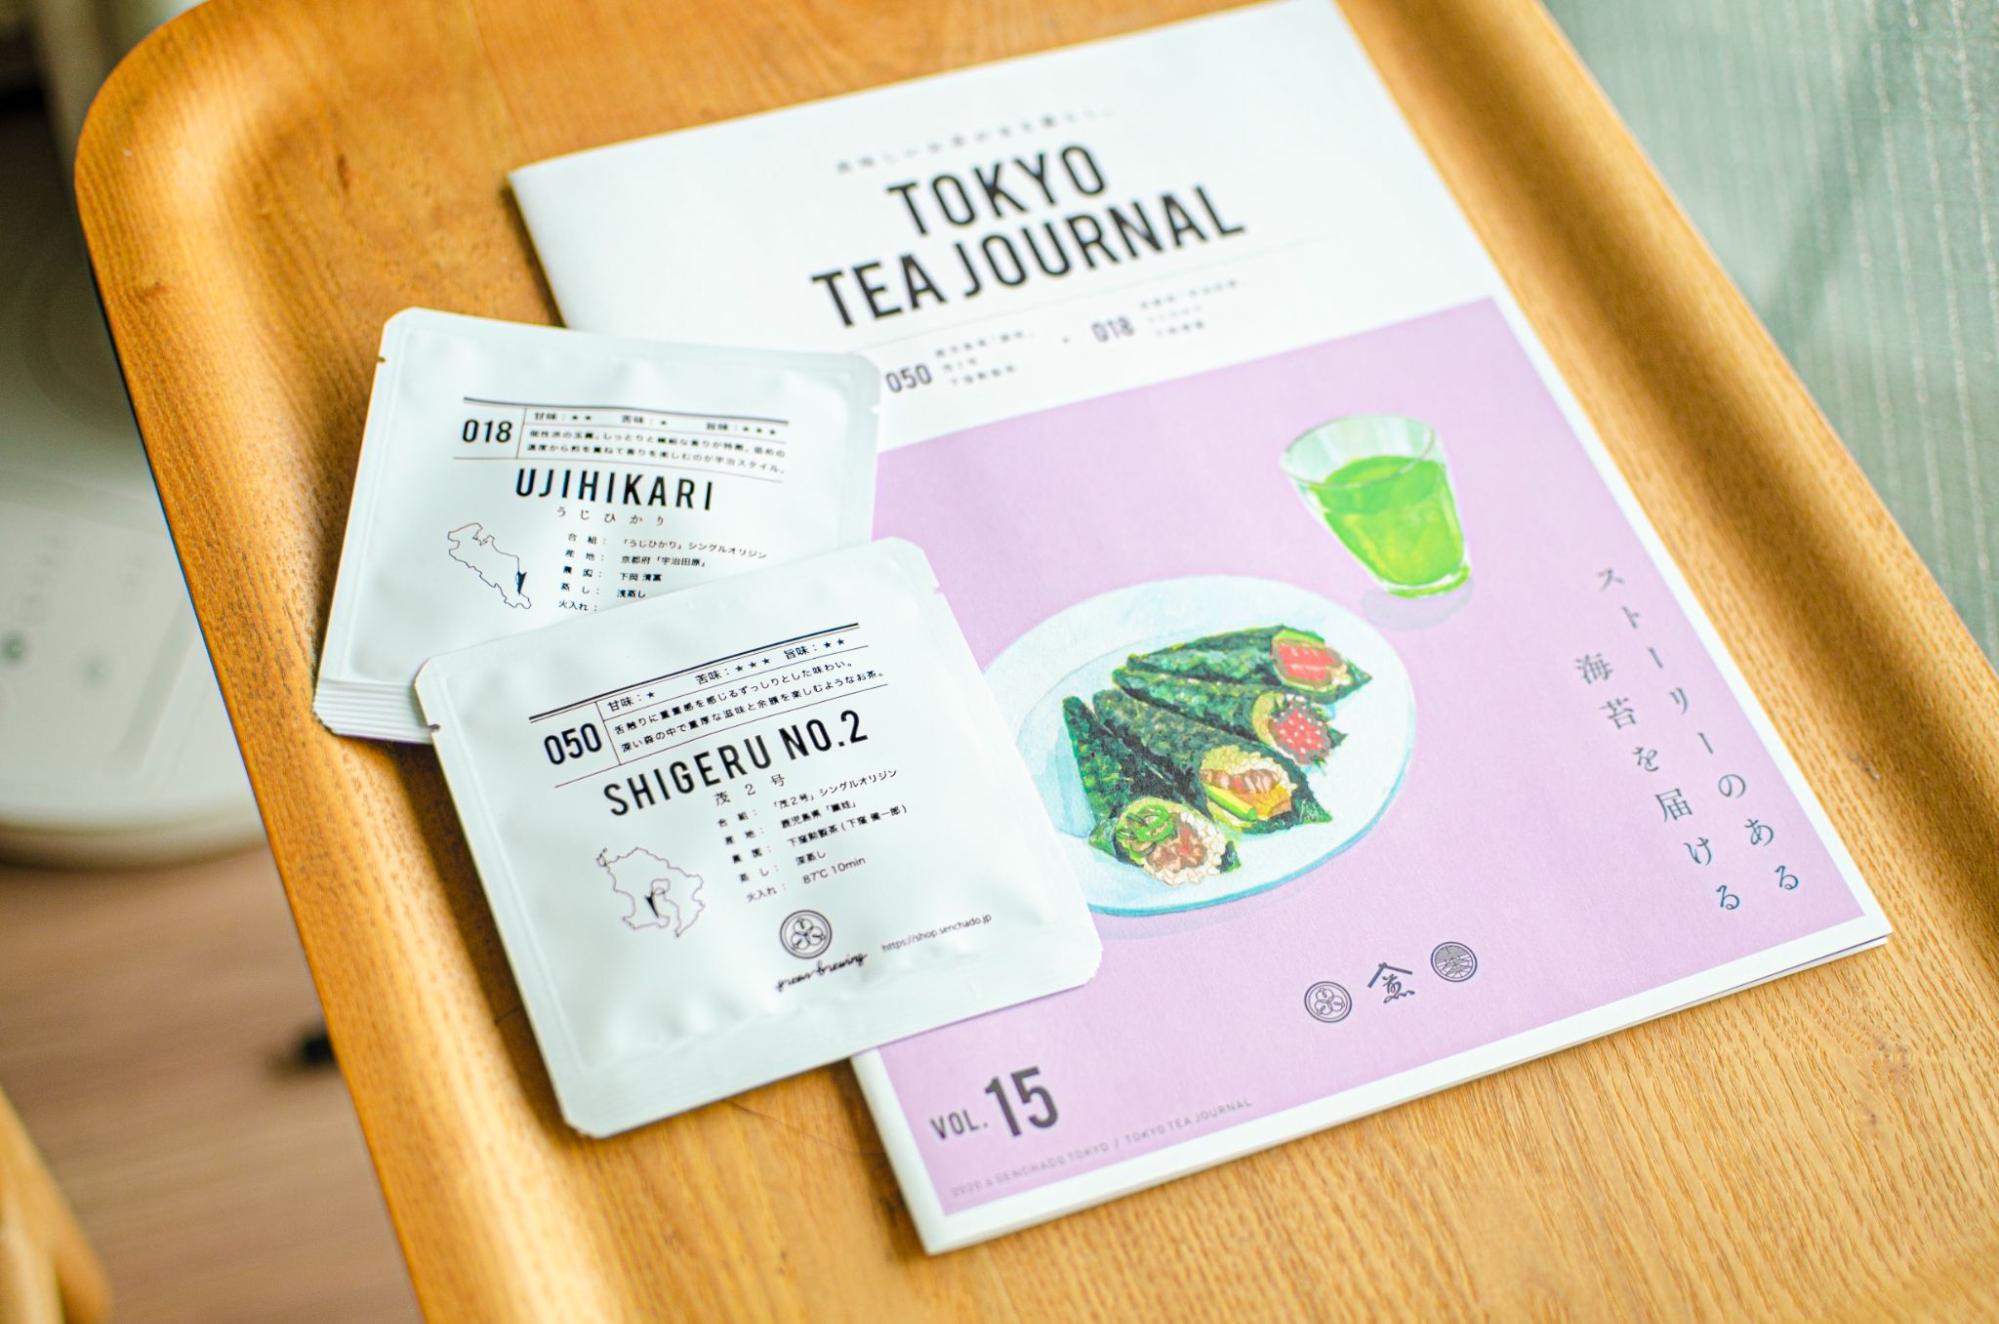 TOKYO TEA JOURNAL